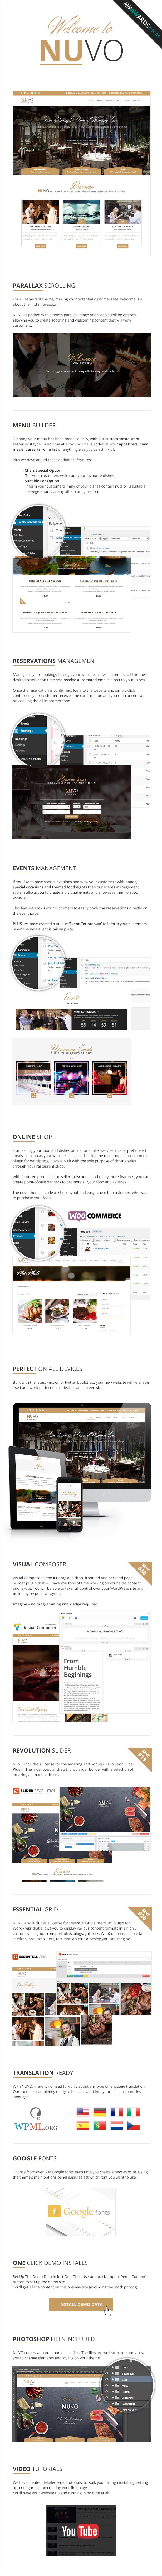 Restaurant Wordpress Theme